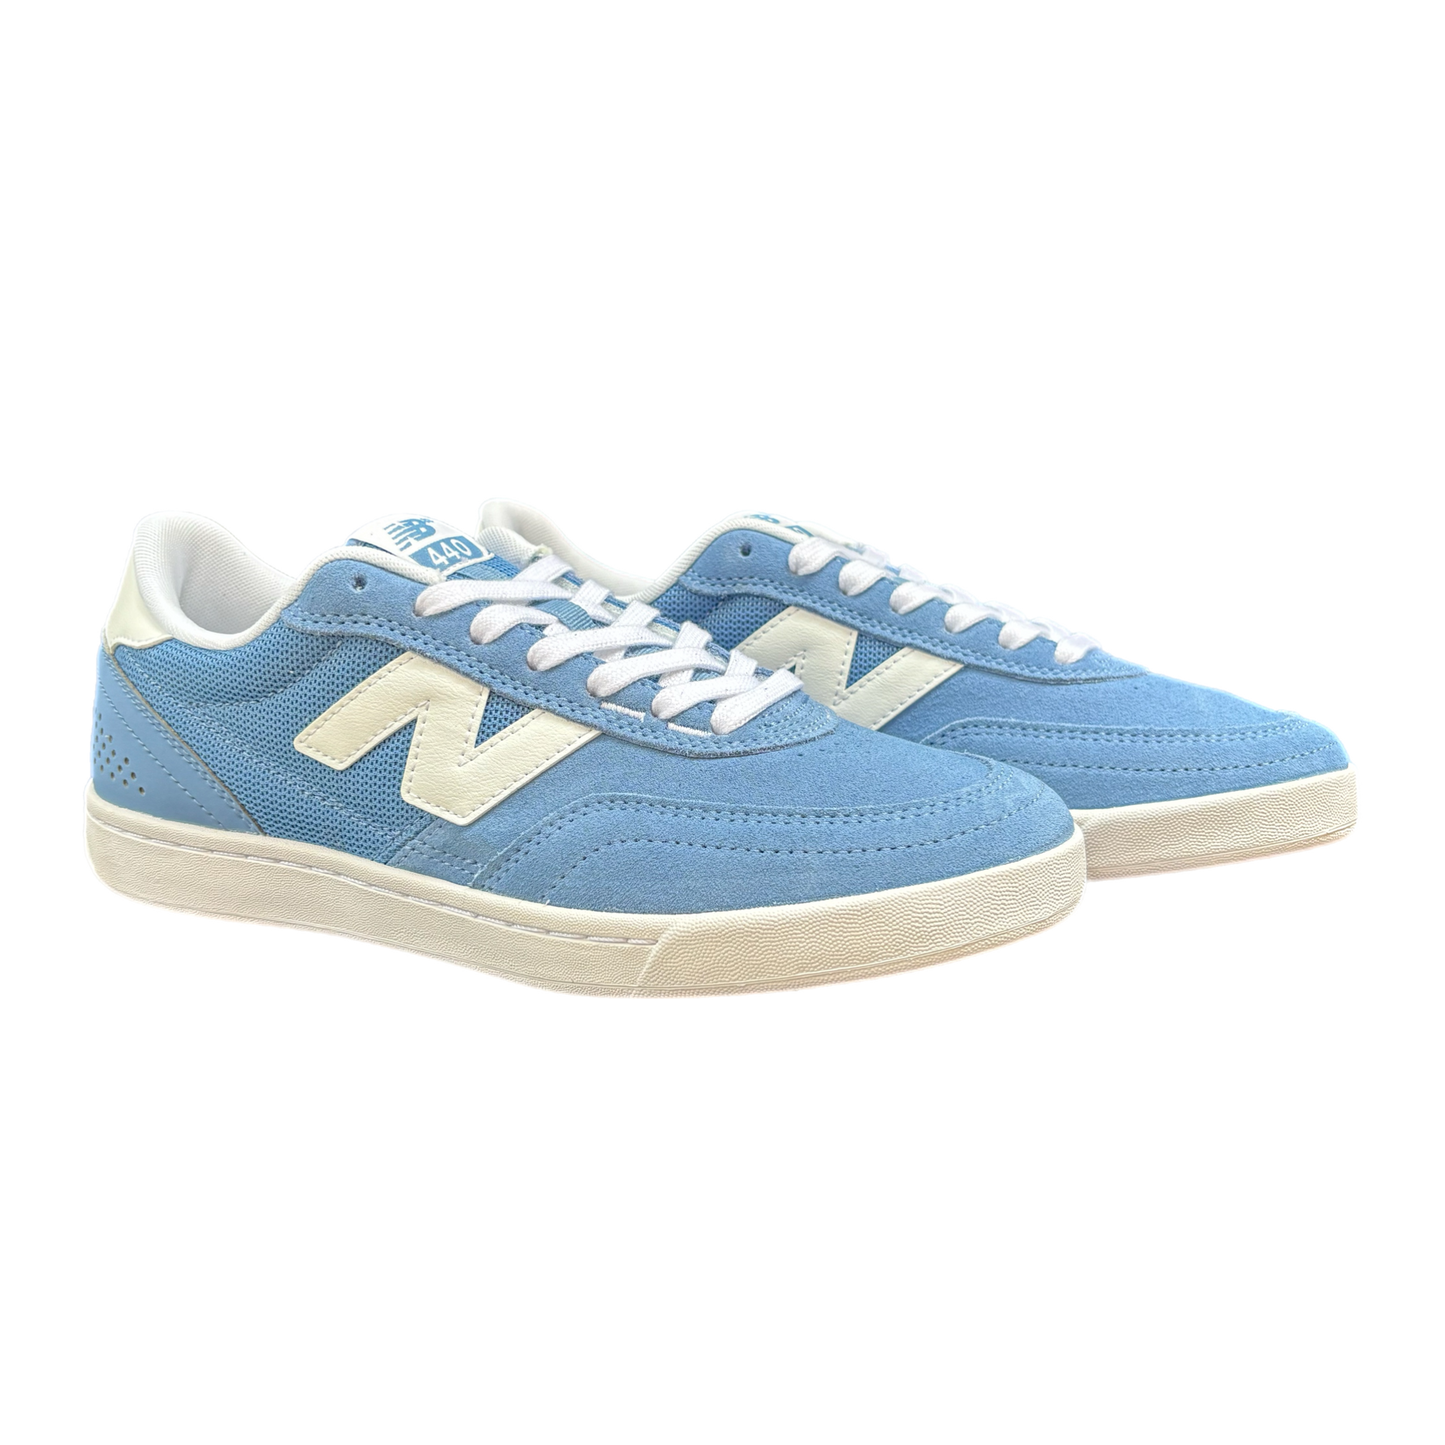 NB Numeric - NM440BBW V2